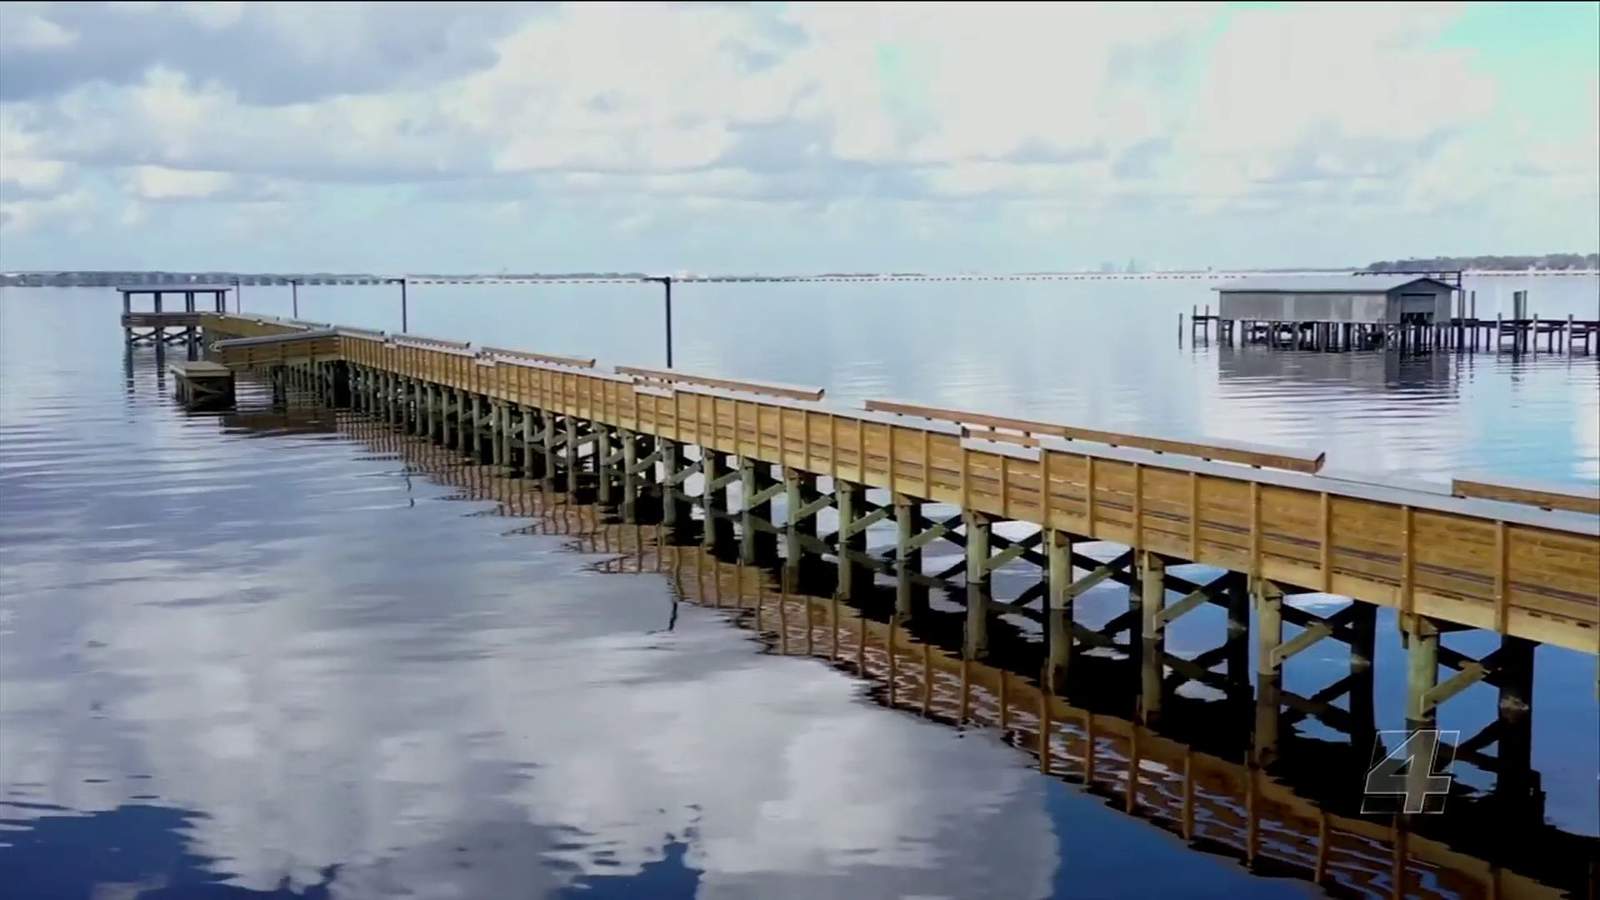 Mandarin pier, boat ramp destroyed by hurricane finally reopen